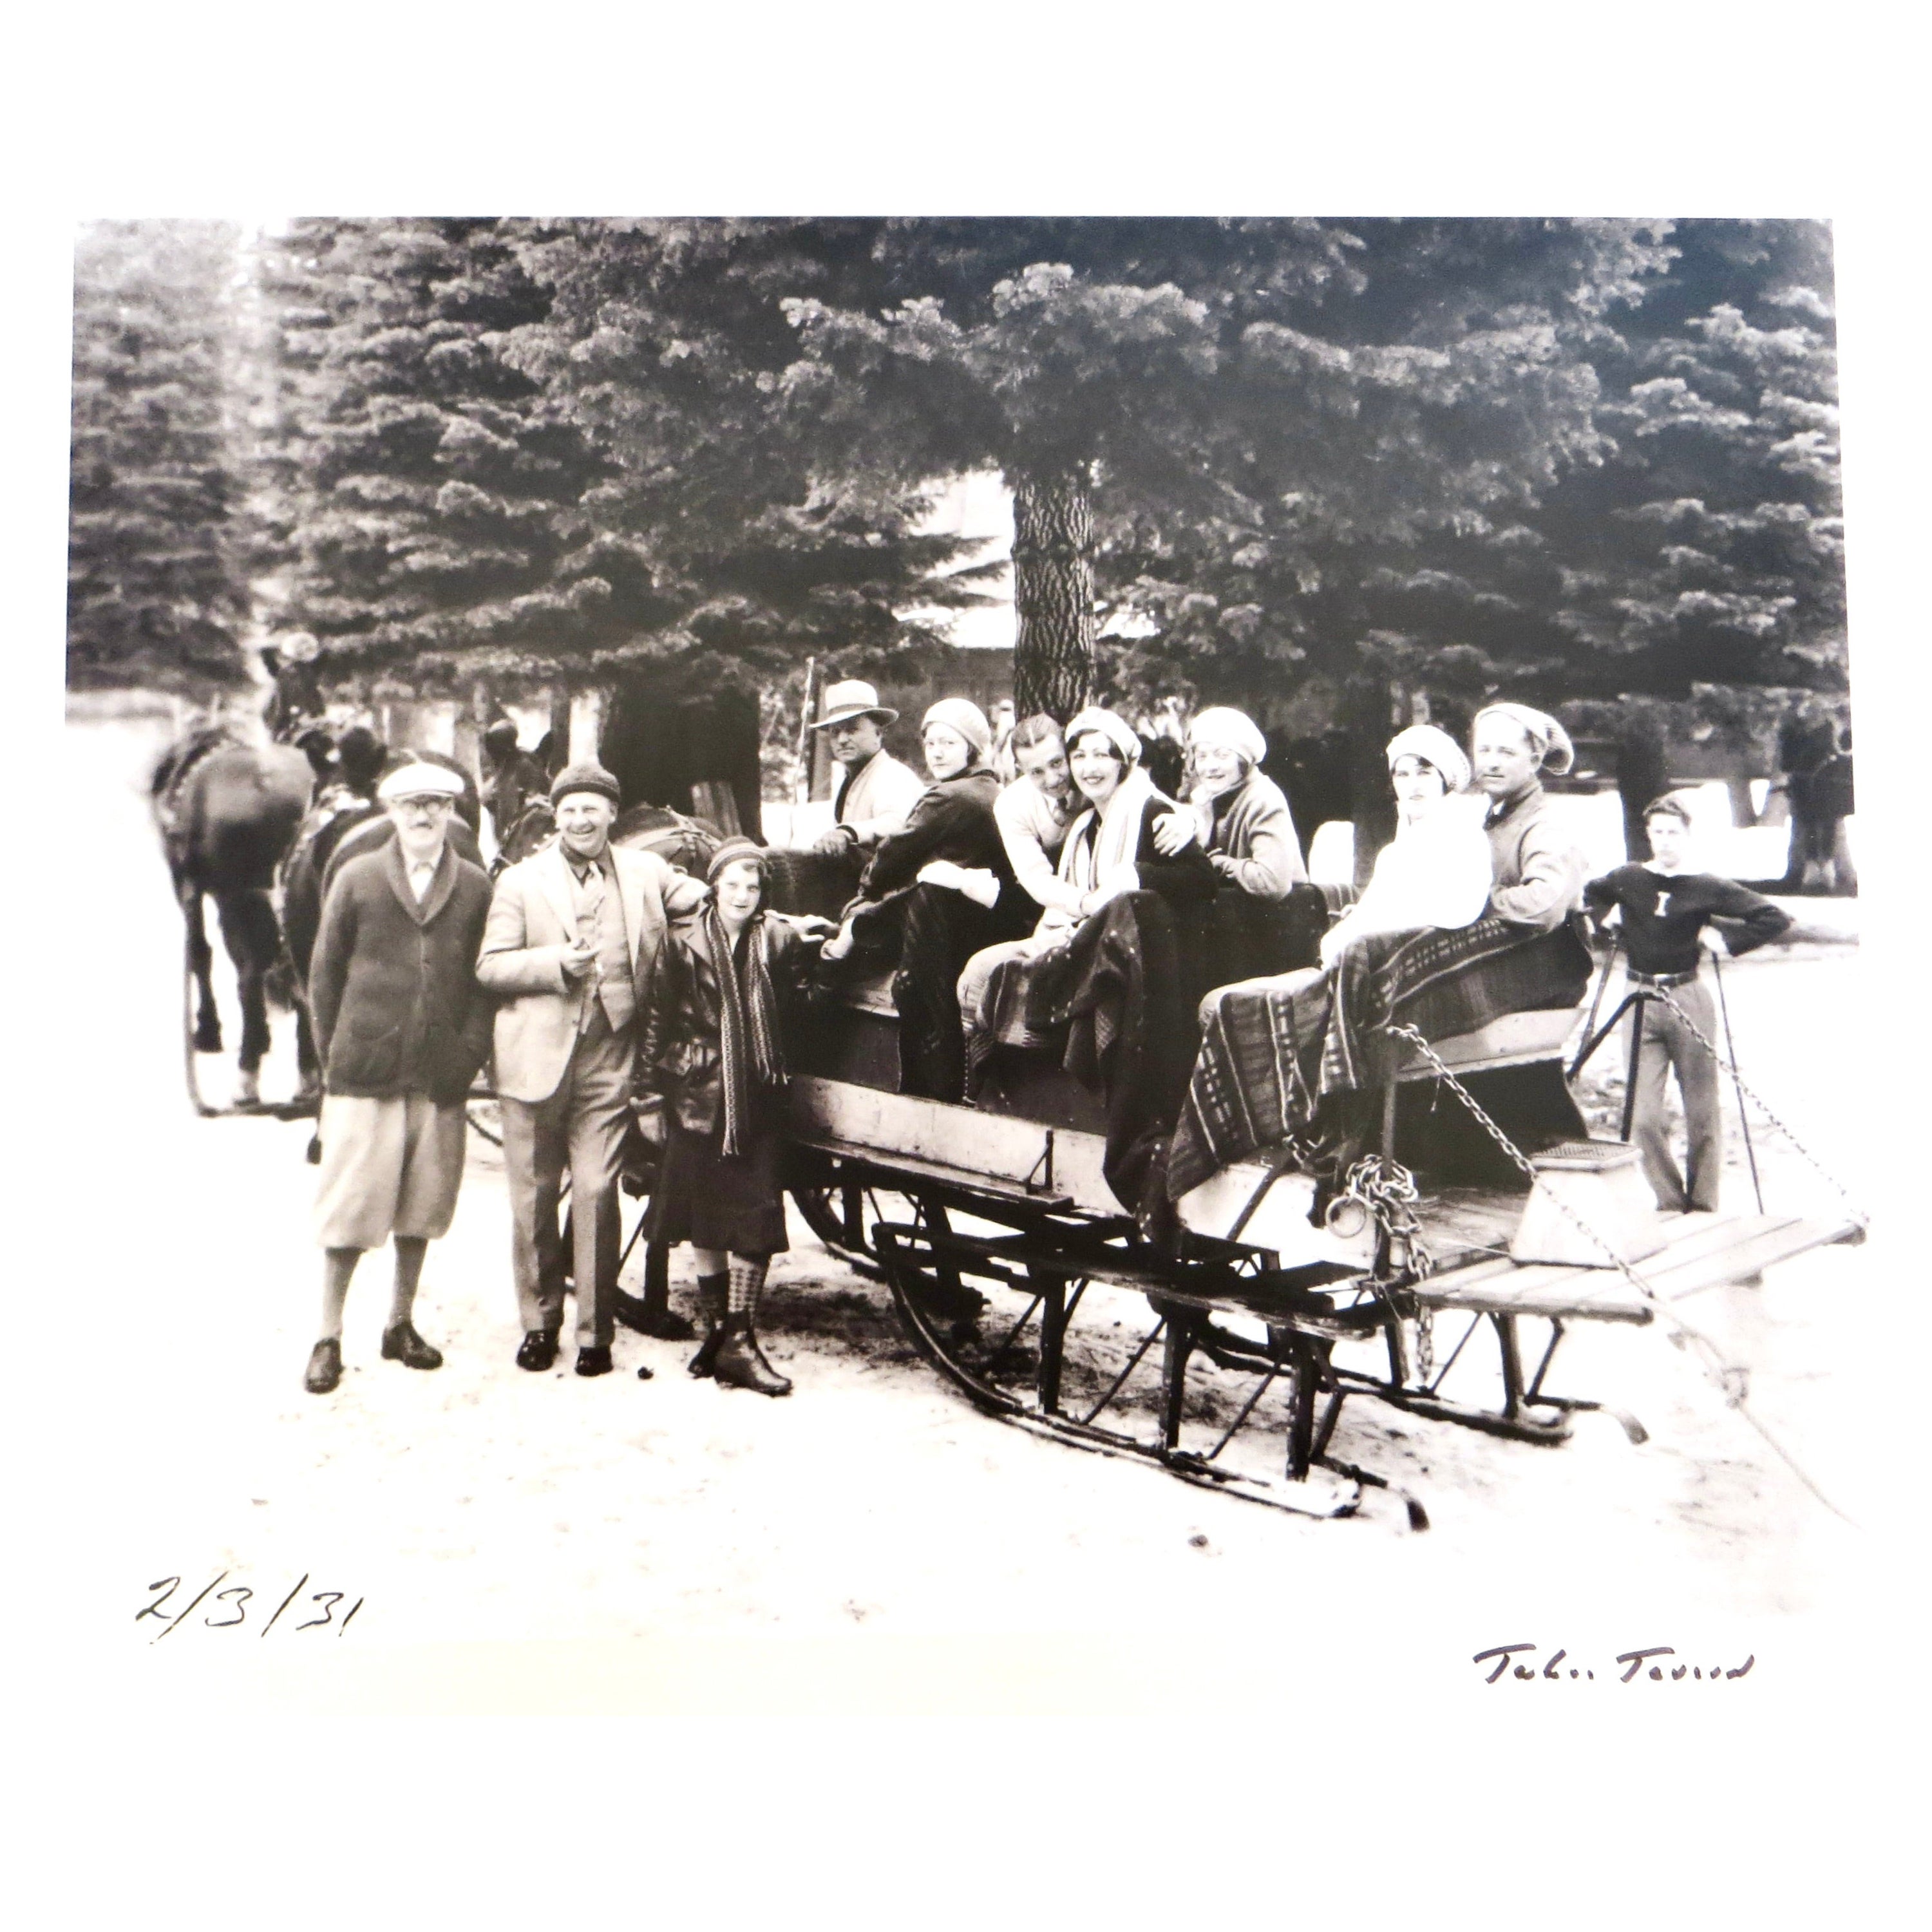 Original-Vintage-Foto; The Lake Tahoe Area „Group of People Sledding“, datiert 1931